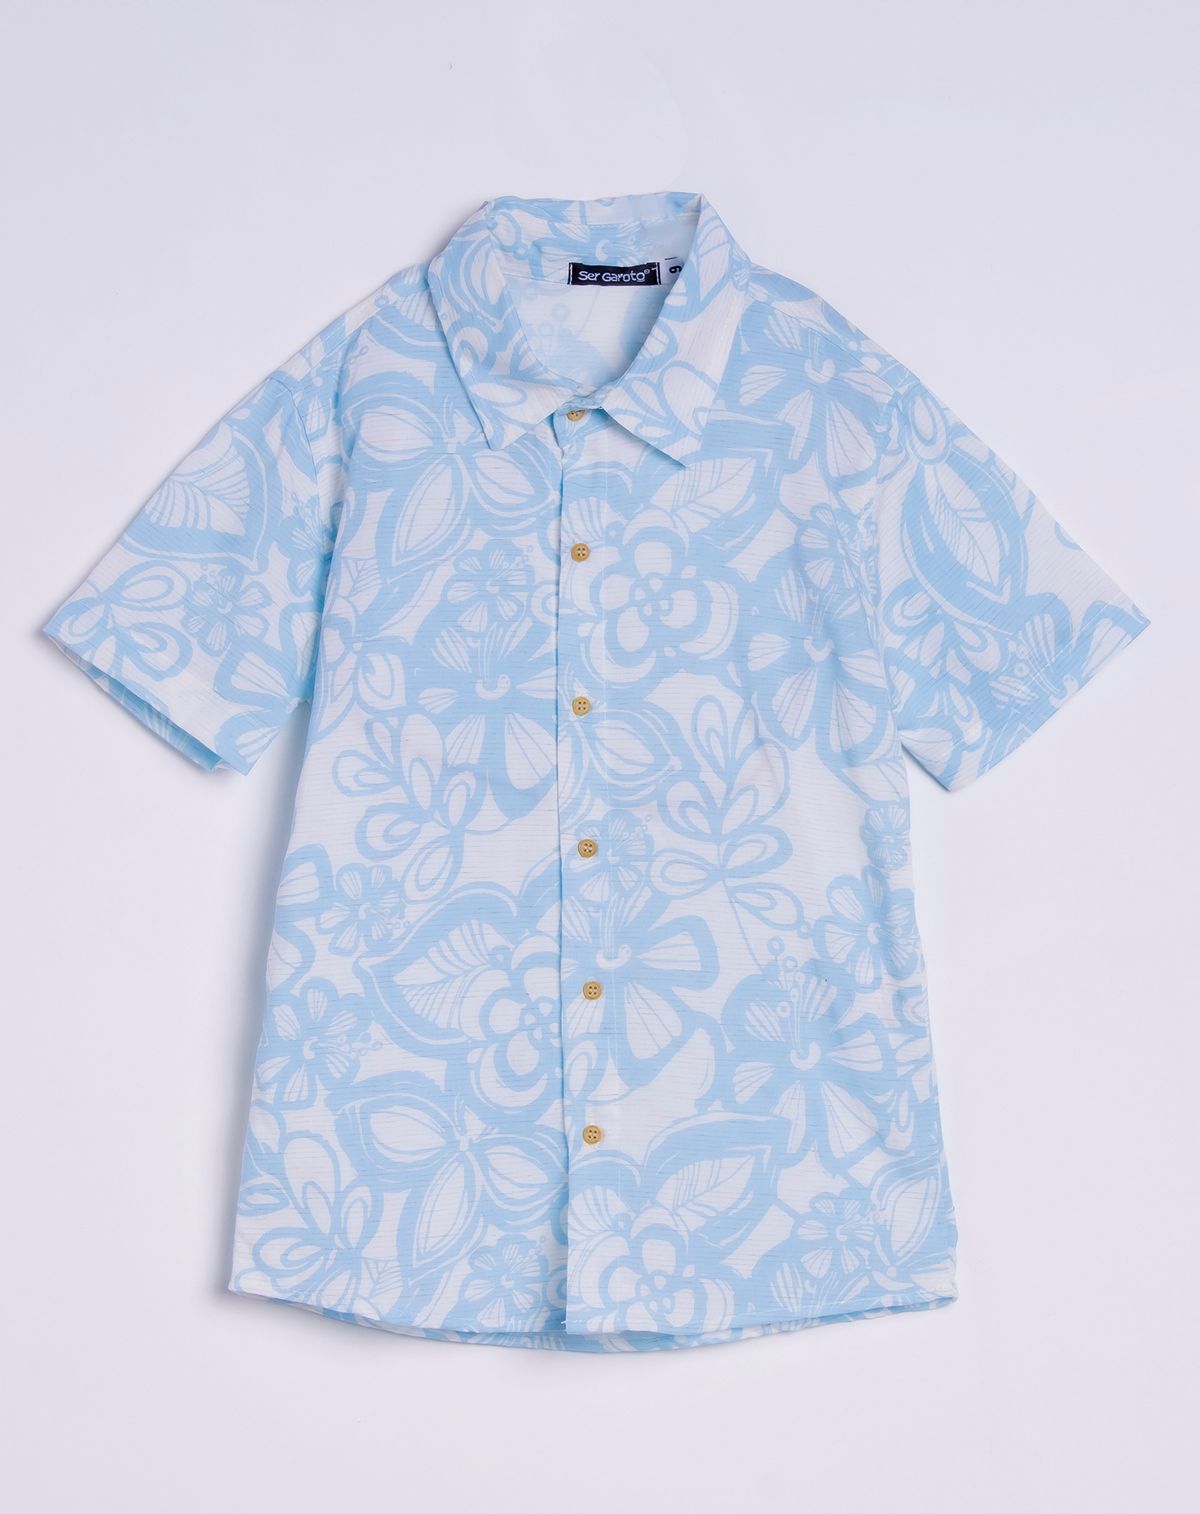 607665004-camisa-manga-curta-infantil-menino-floral-azul-10-6bd